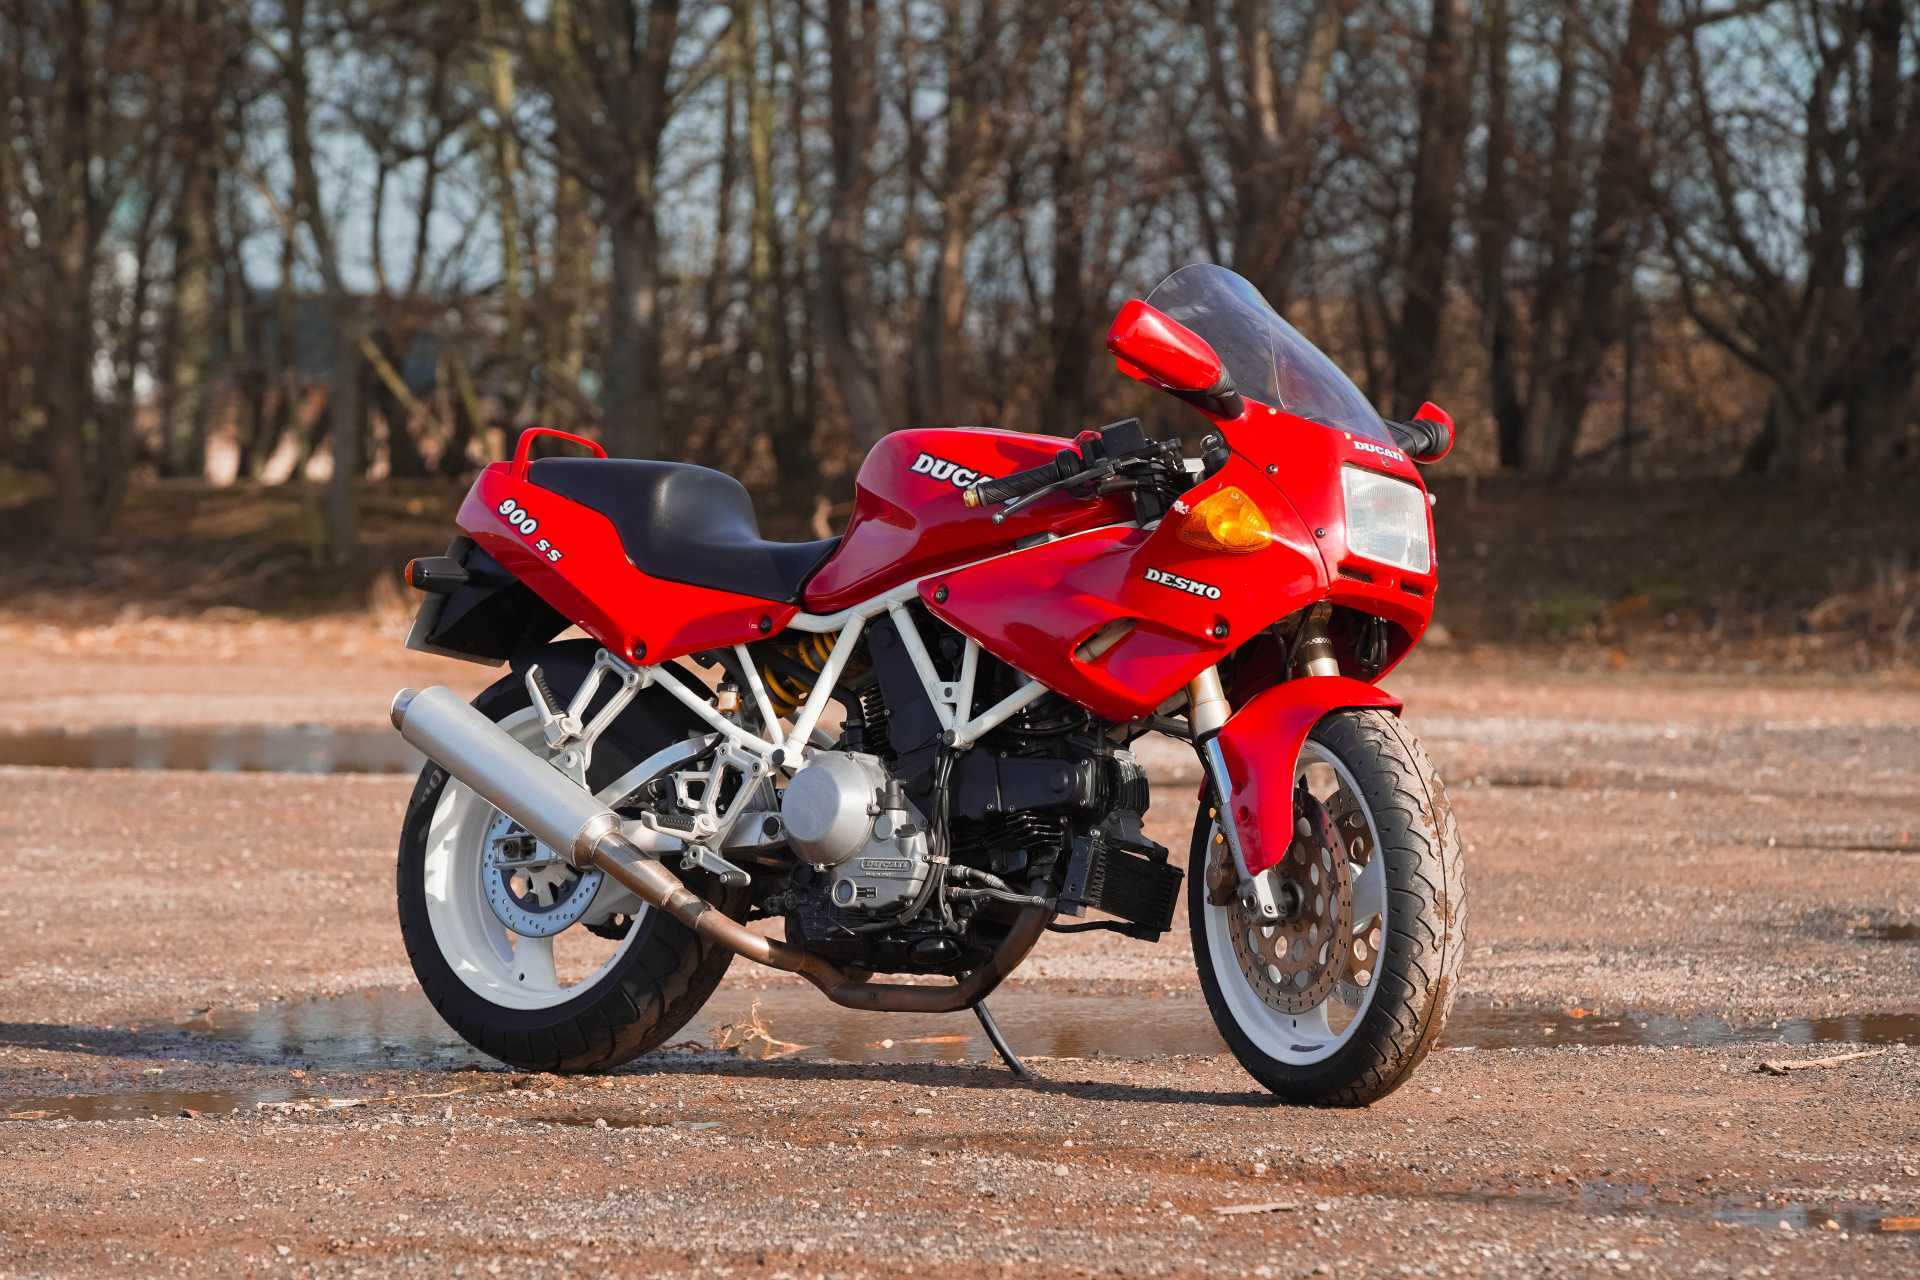 1991 904cc Ducati 900SS motorcycle